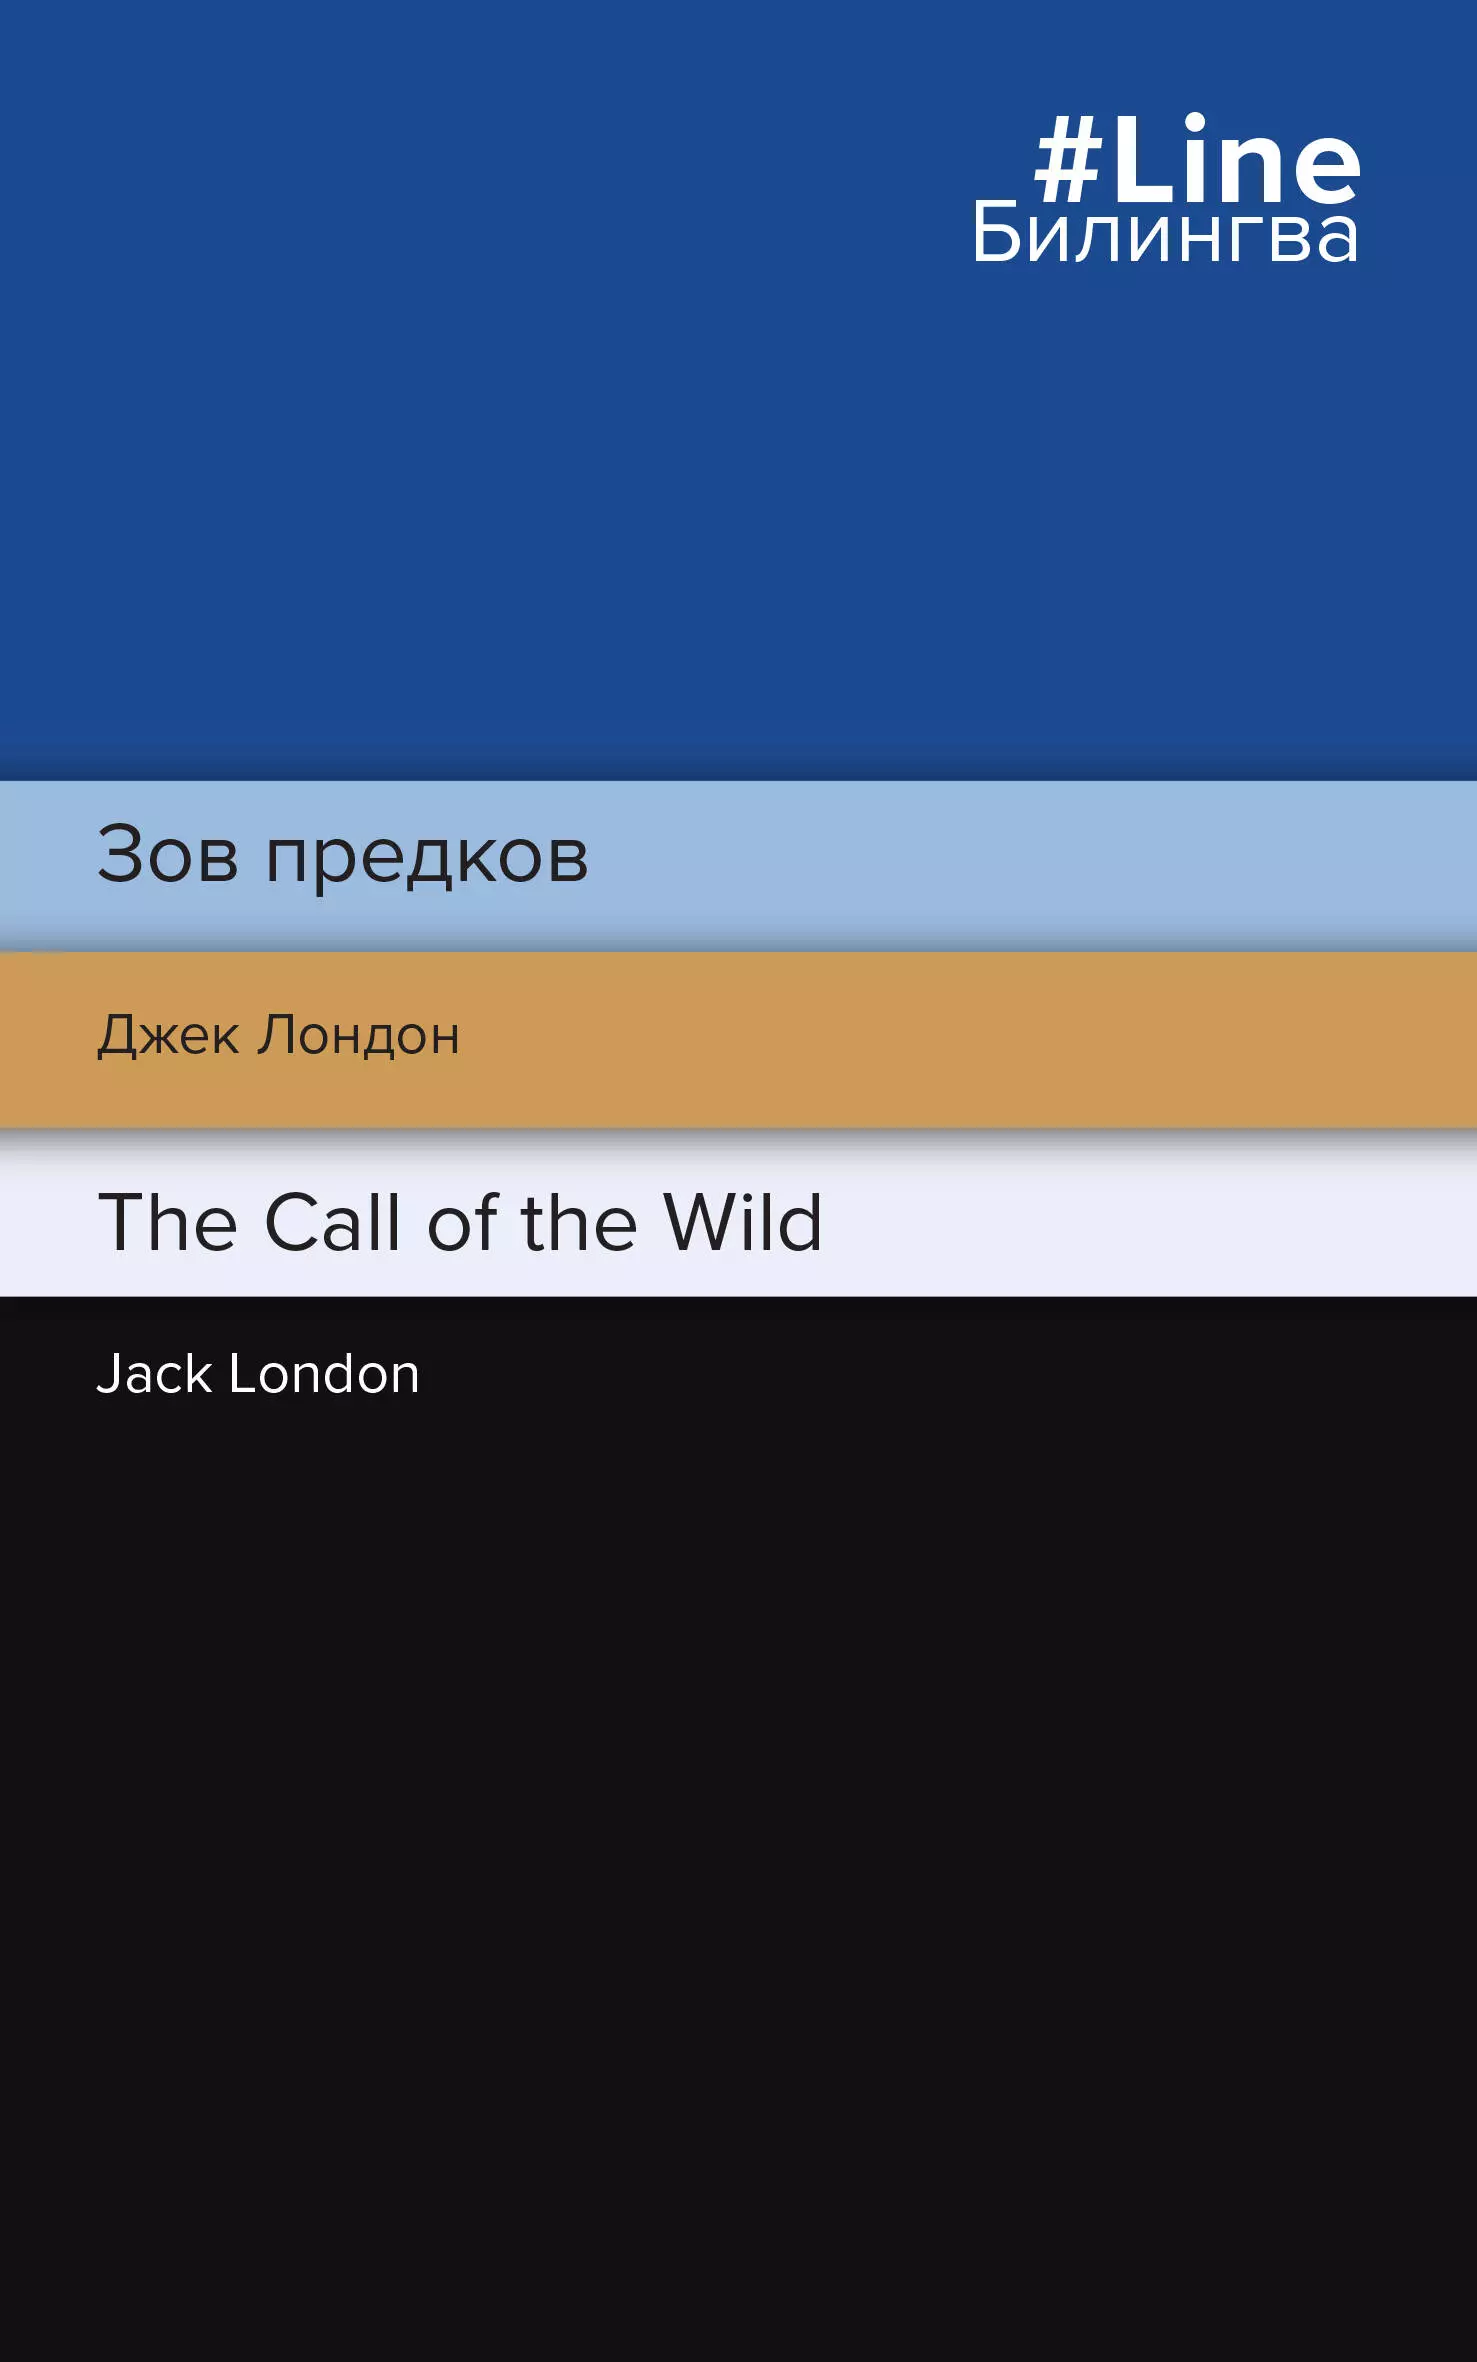 Лондон Джек - Зов предков / The Call of the Wild